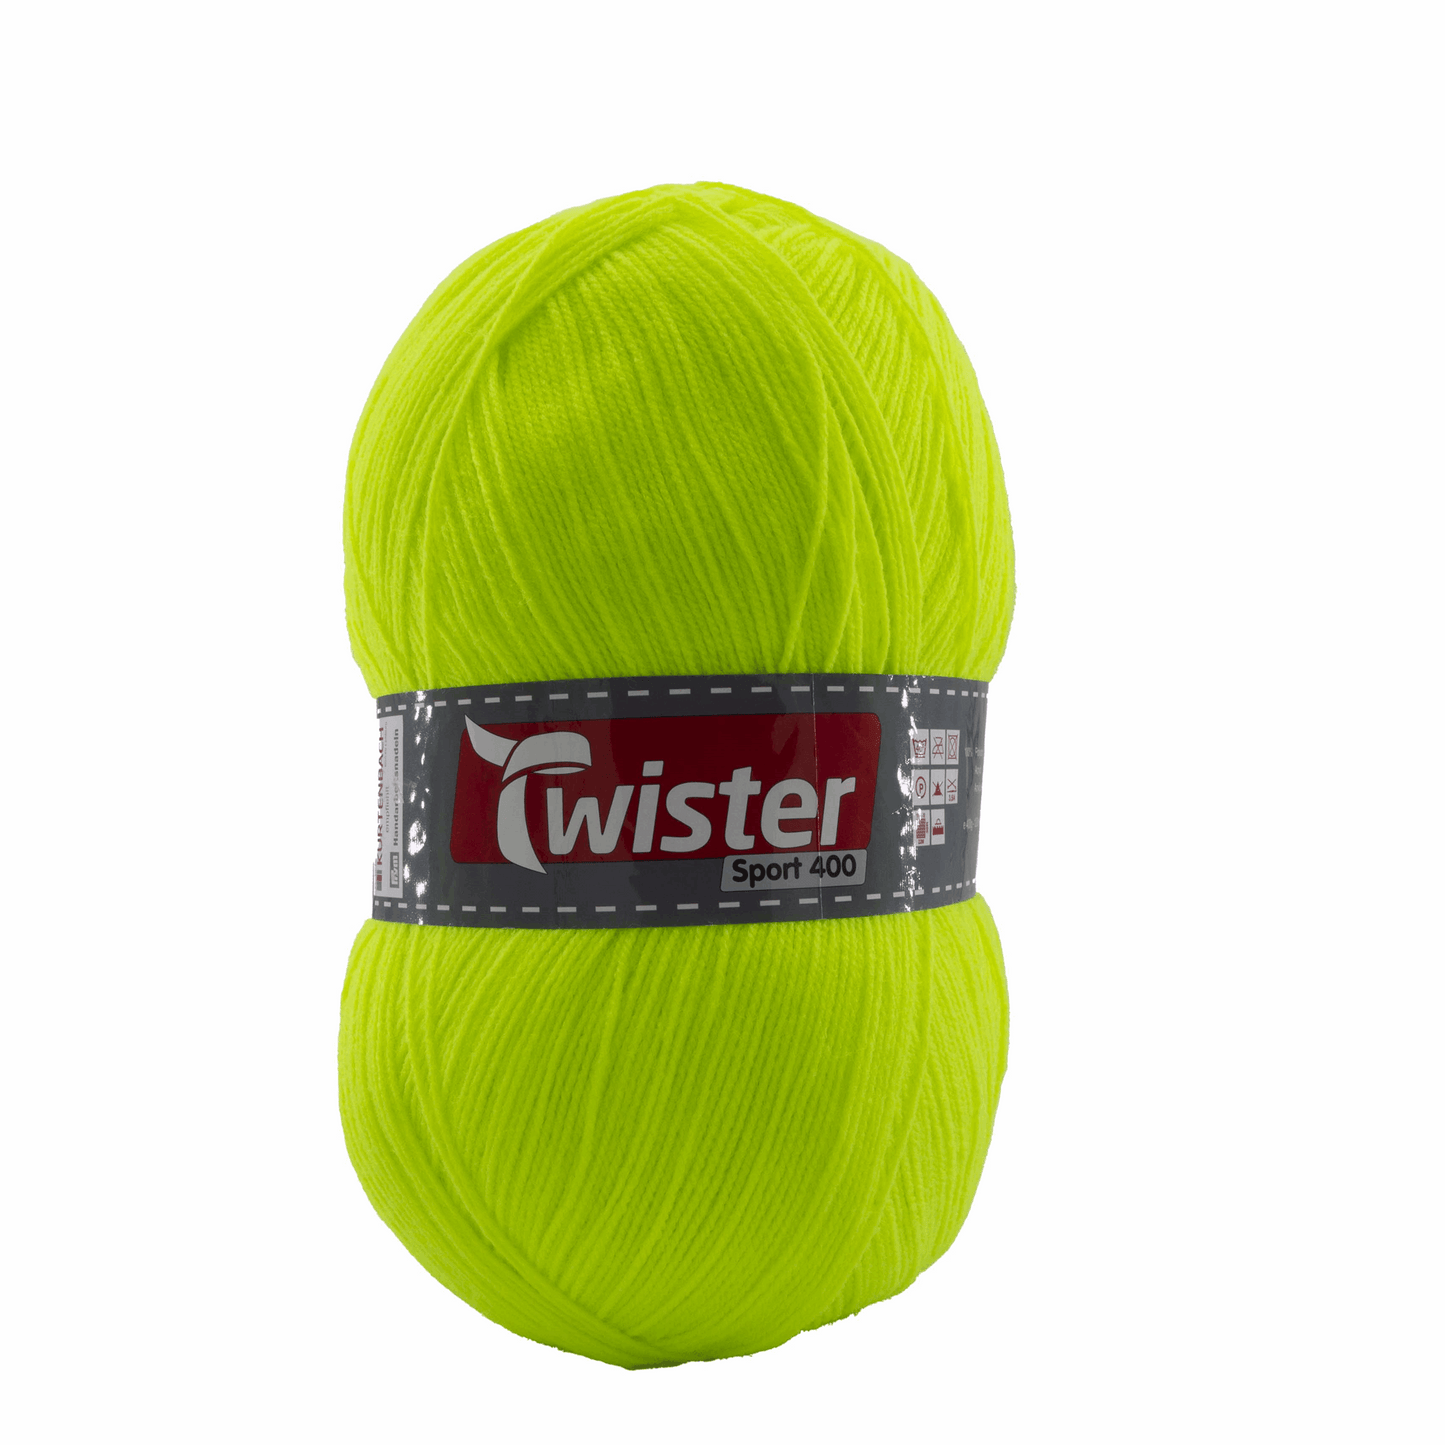 Twister Sport 400, 98328, Farbe neongelb 21